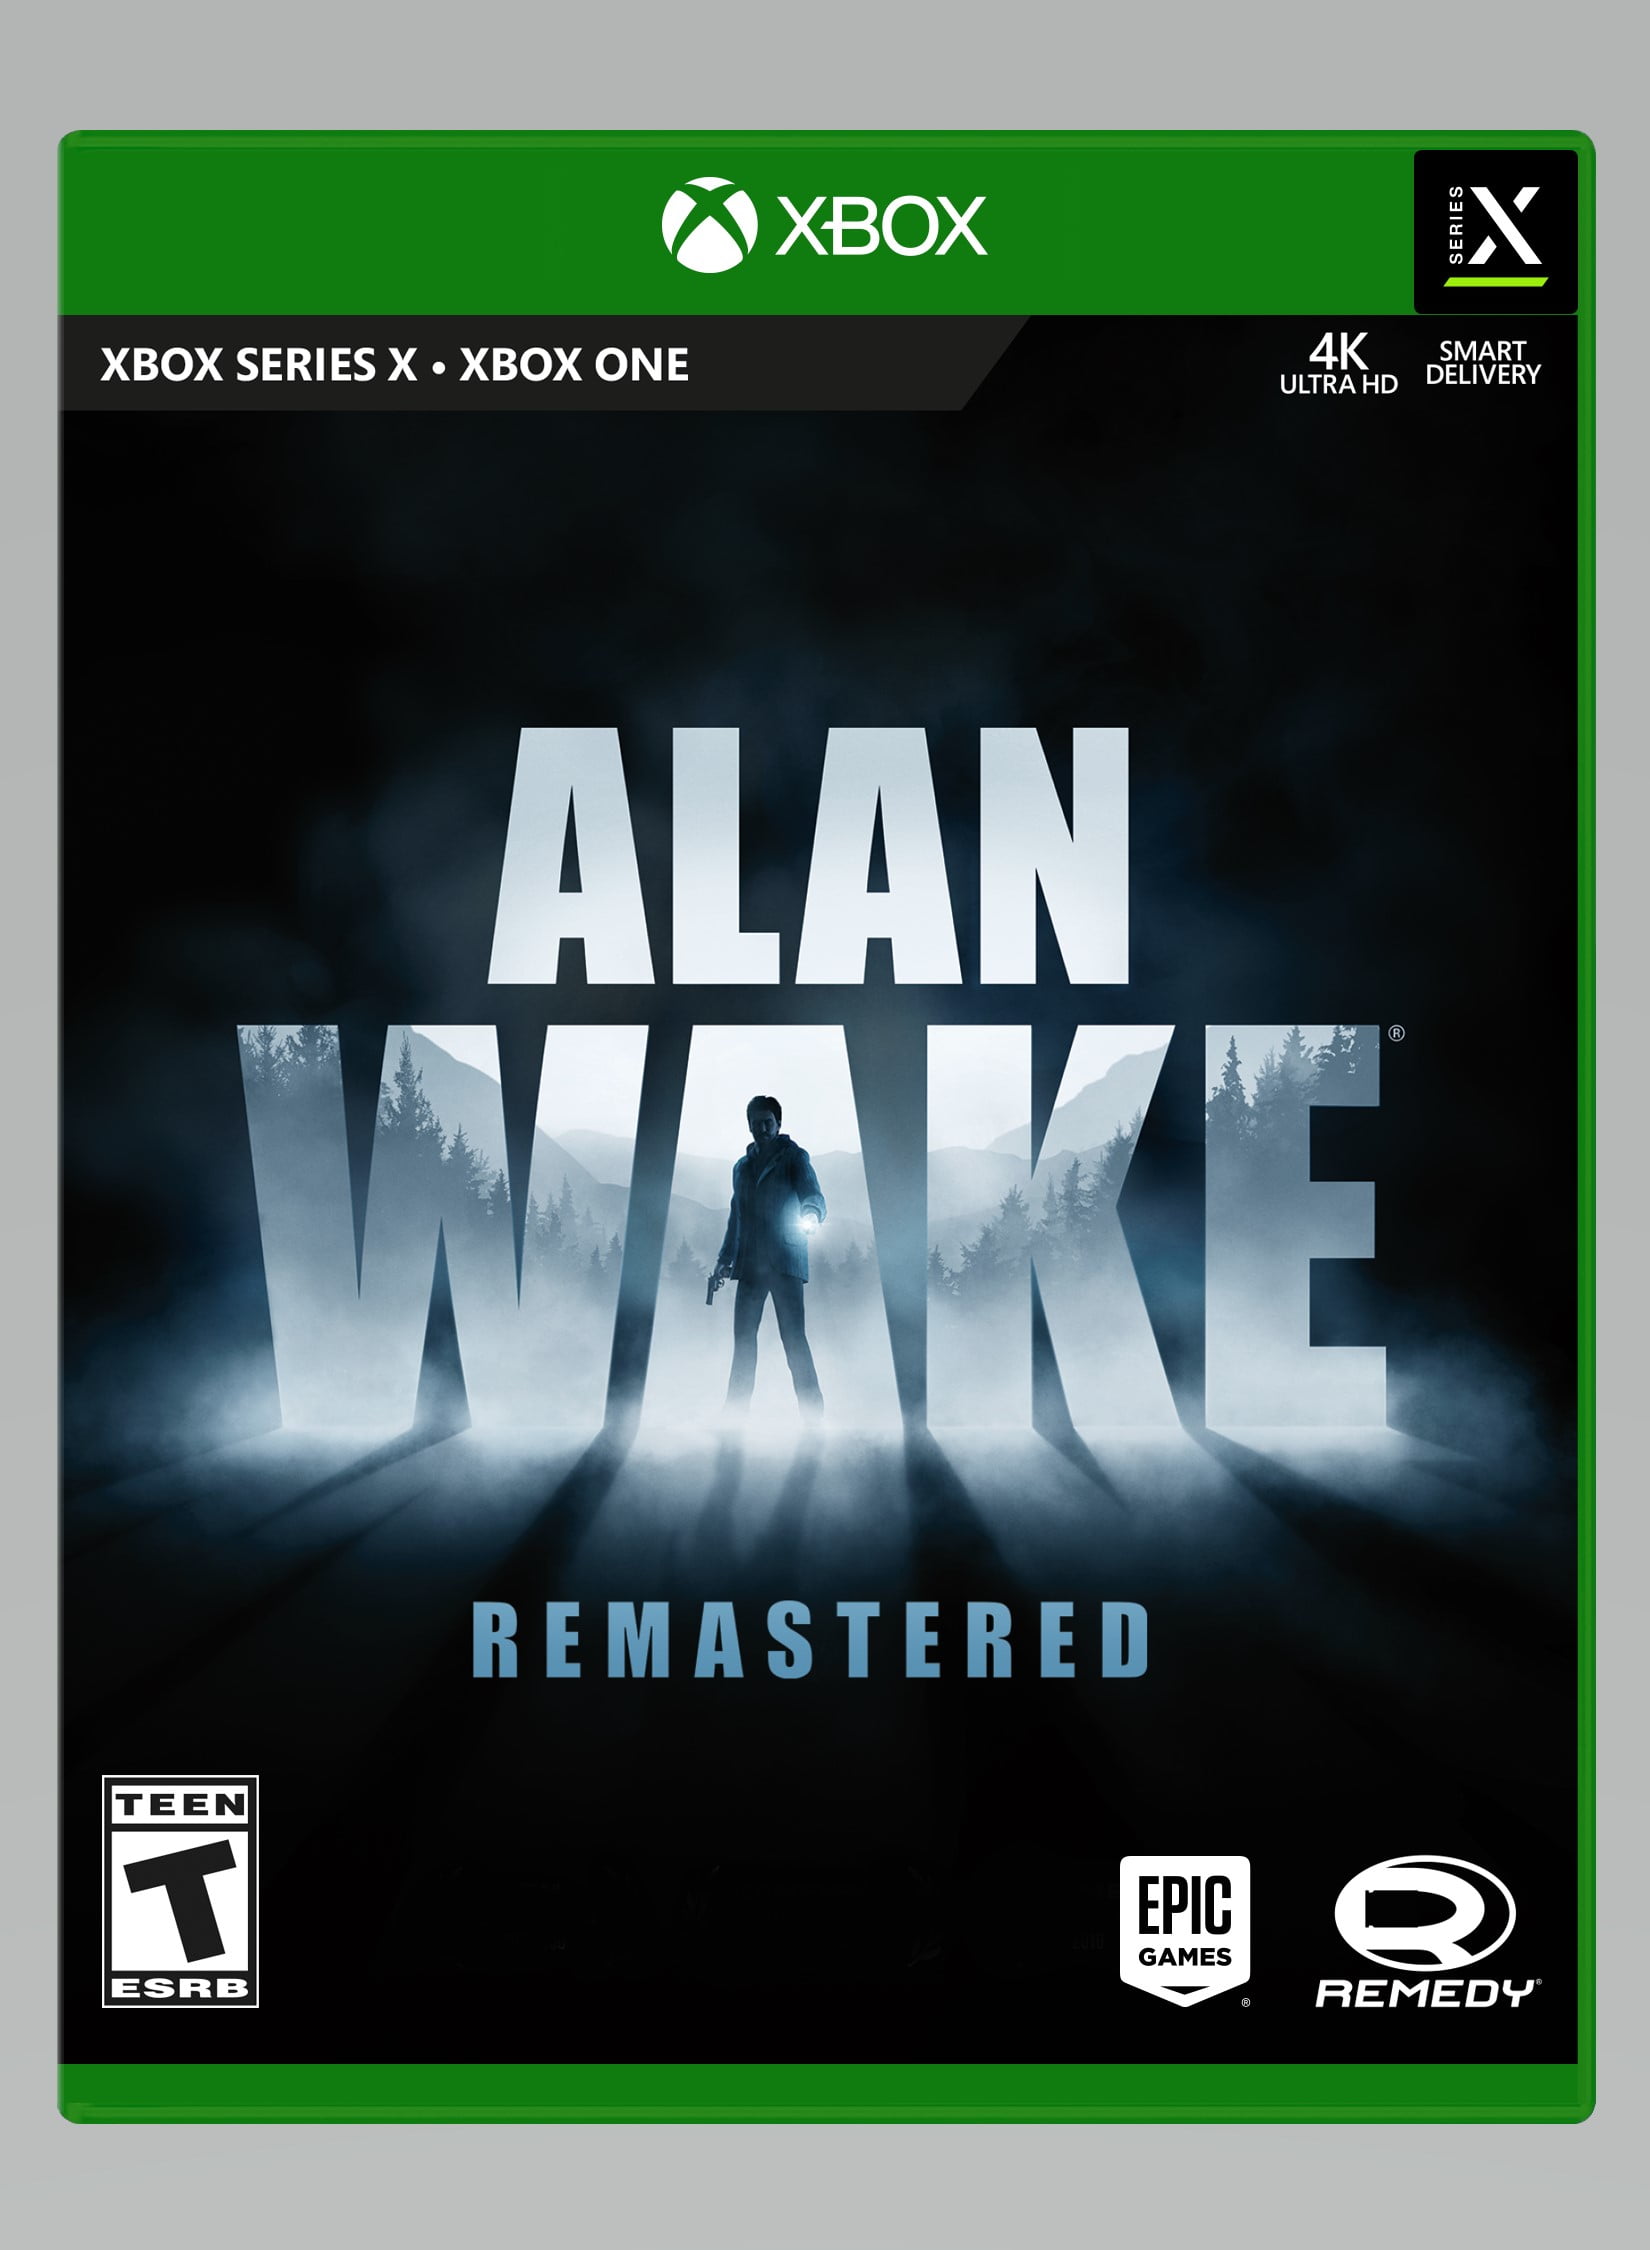 Alan Wake's American Nightmare - Xbox Series X Gameplay [4K] 